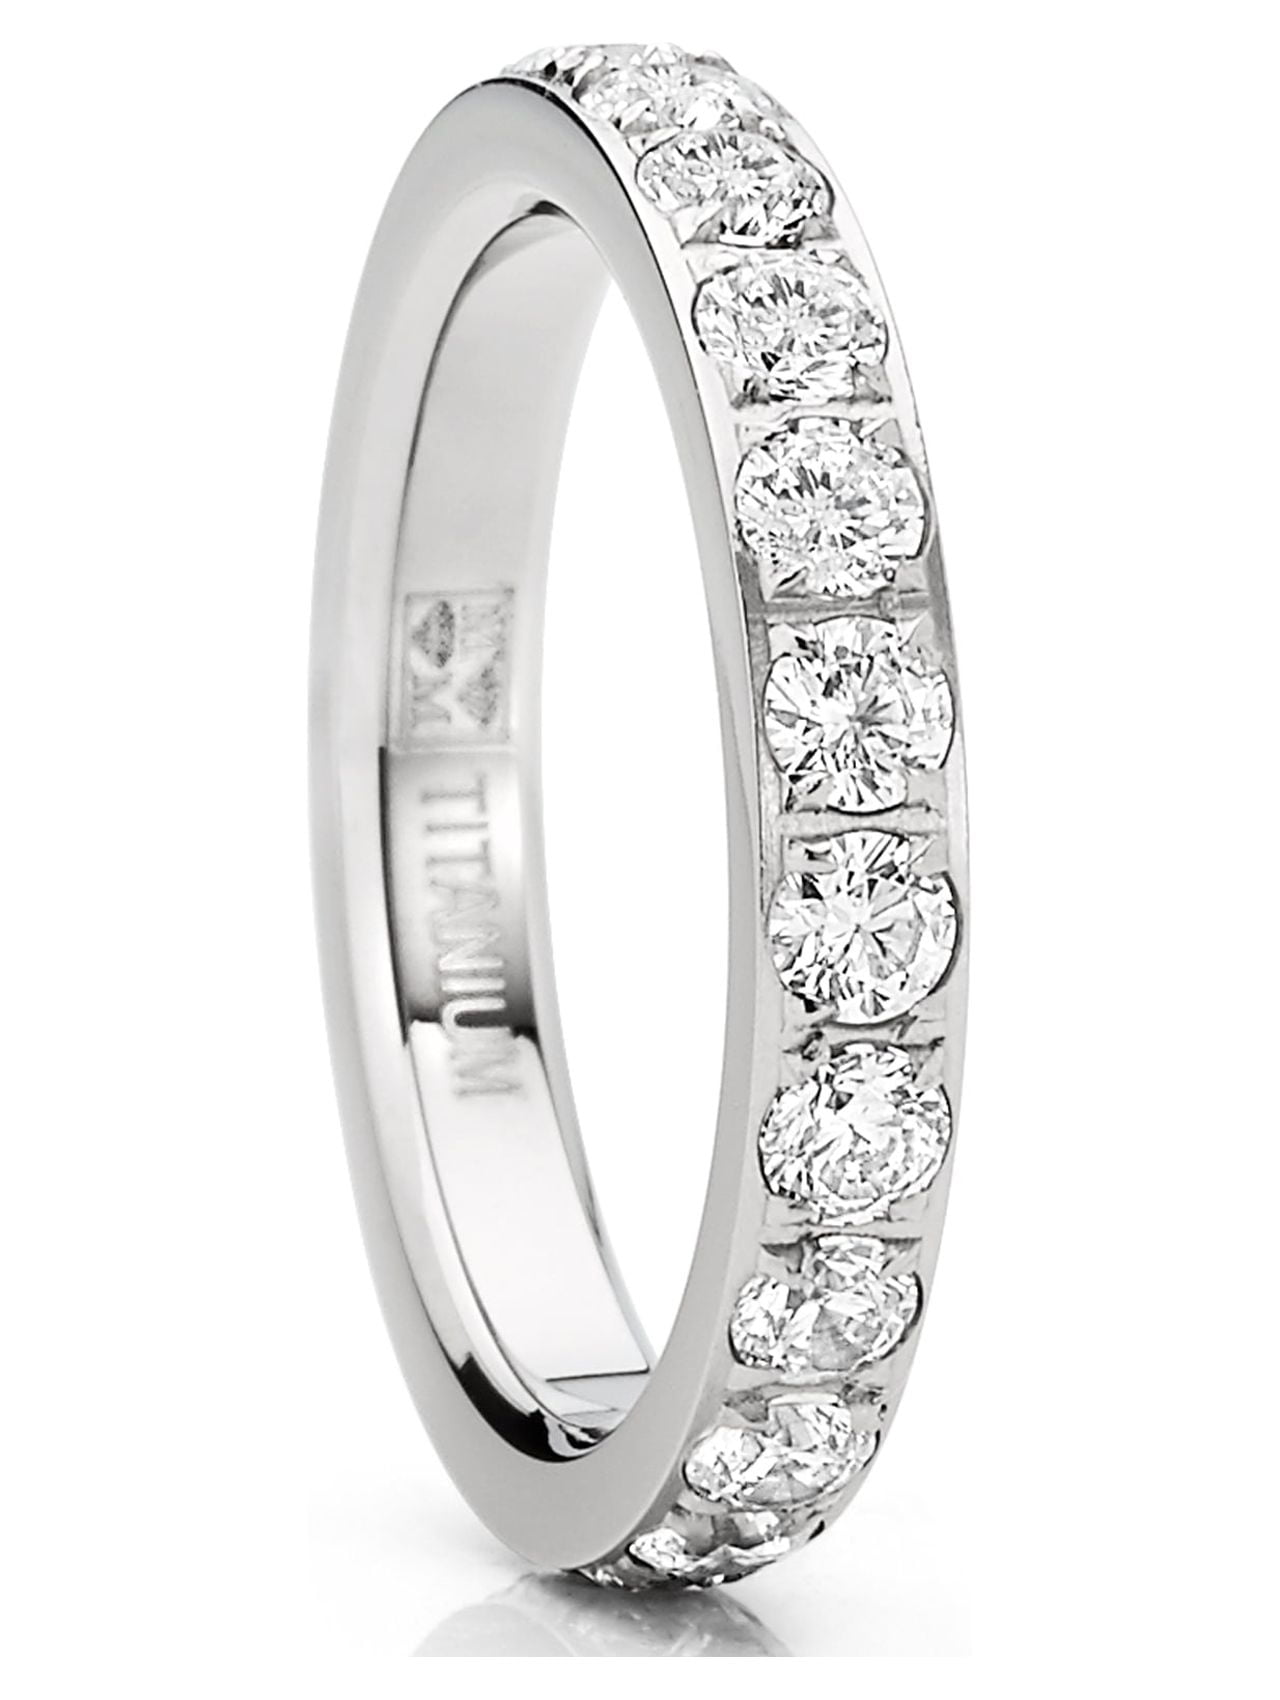 14K White Gold Thin French Cut Pavé Set Diamond Eternity Wedding Ring -14208w14